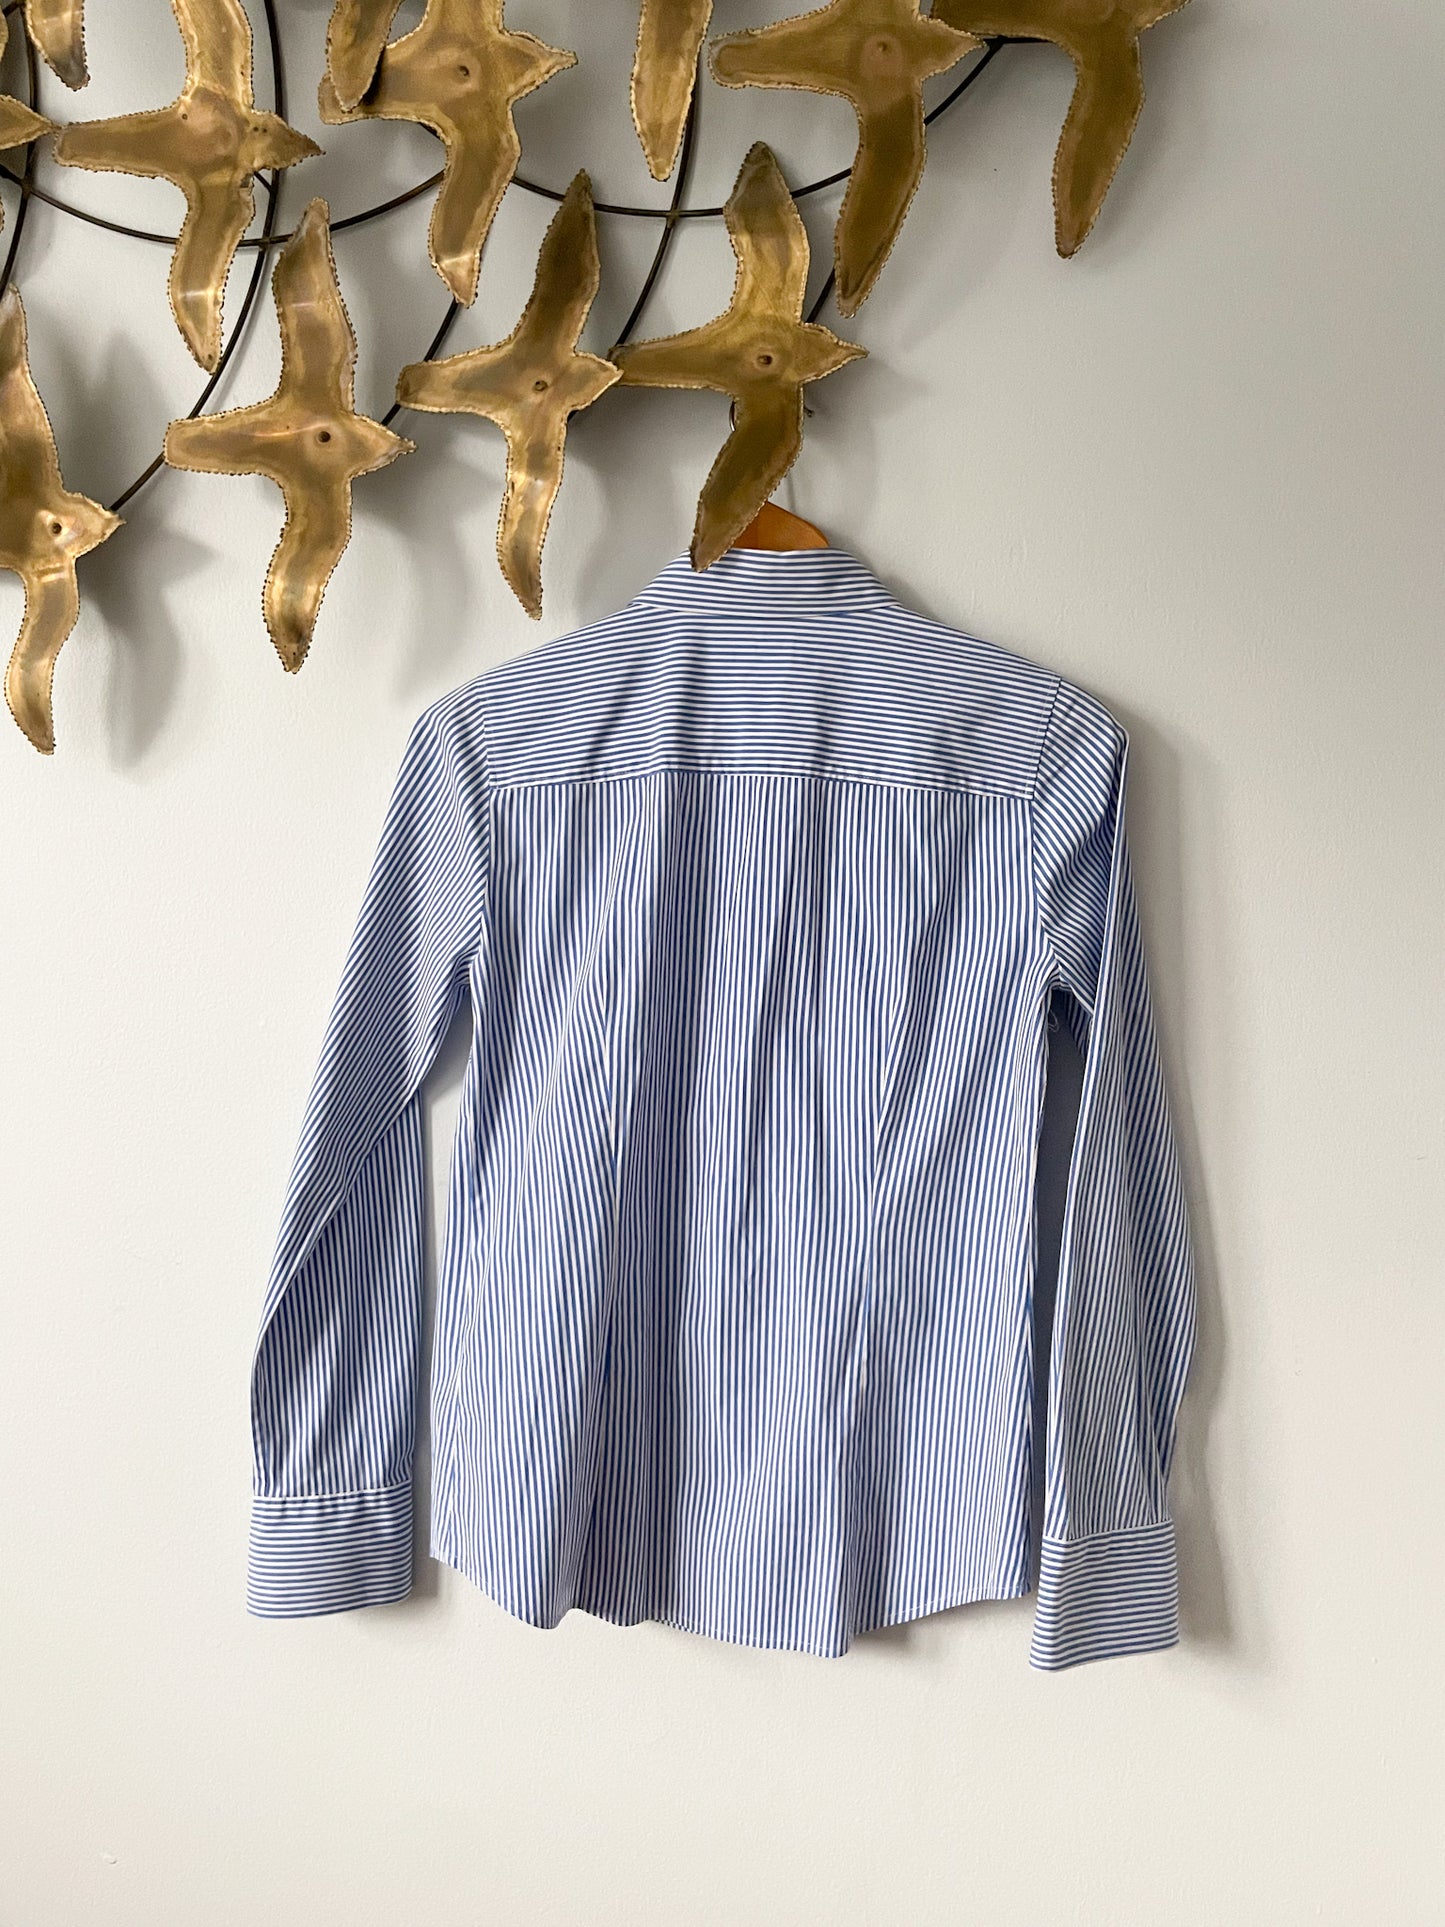 J. Crew Blue Stripe Cotton Stretch Button Up Shirt - XS/S